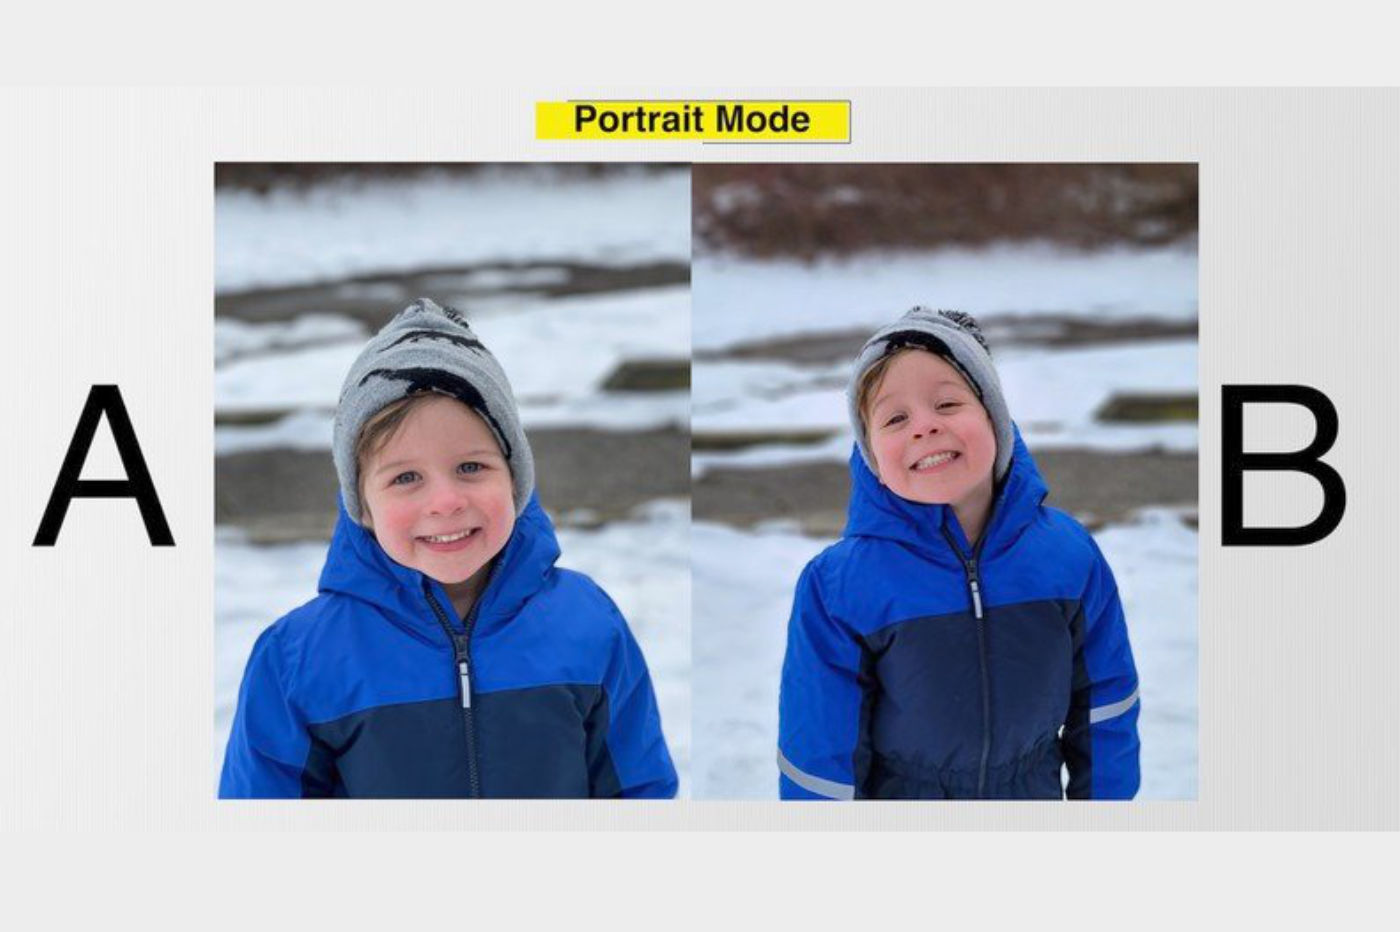 Portrait mode iPhone 12 Pro Max vs Galaxy S21 ultra 